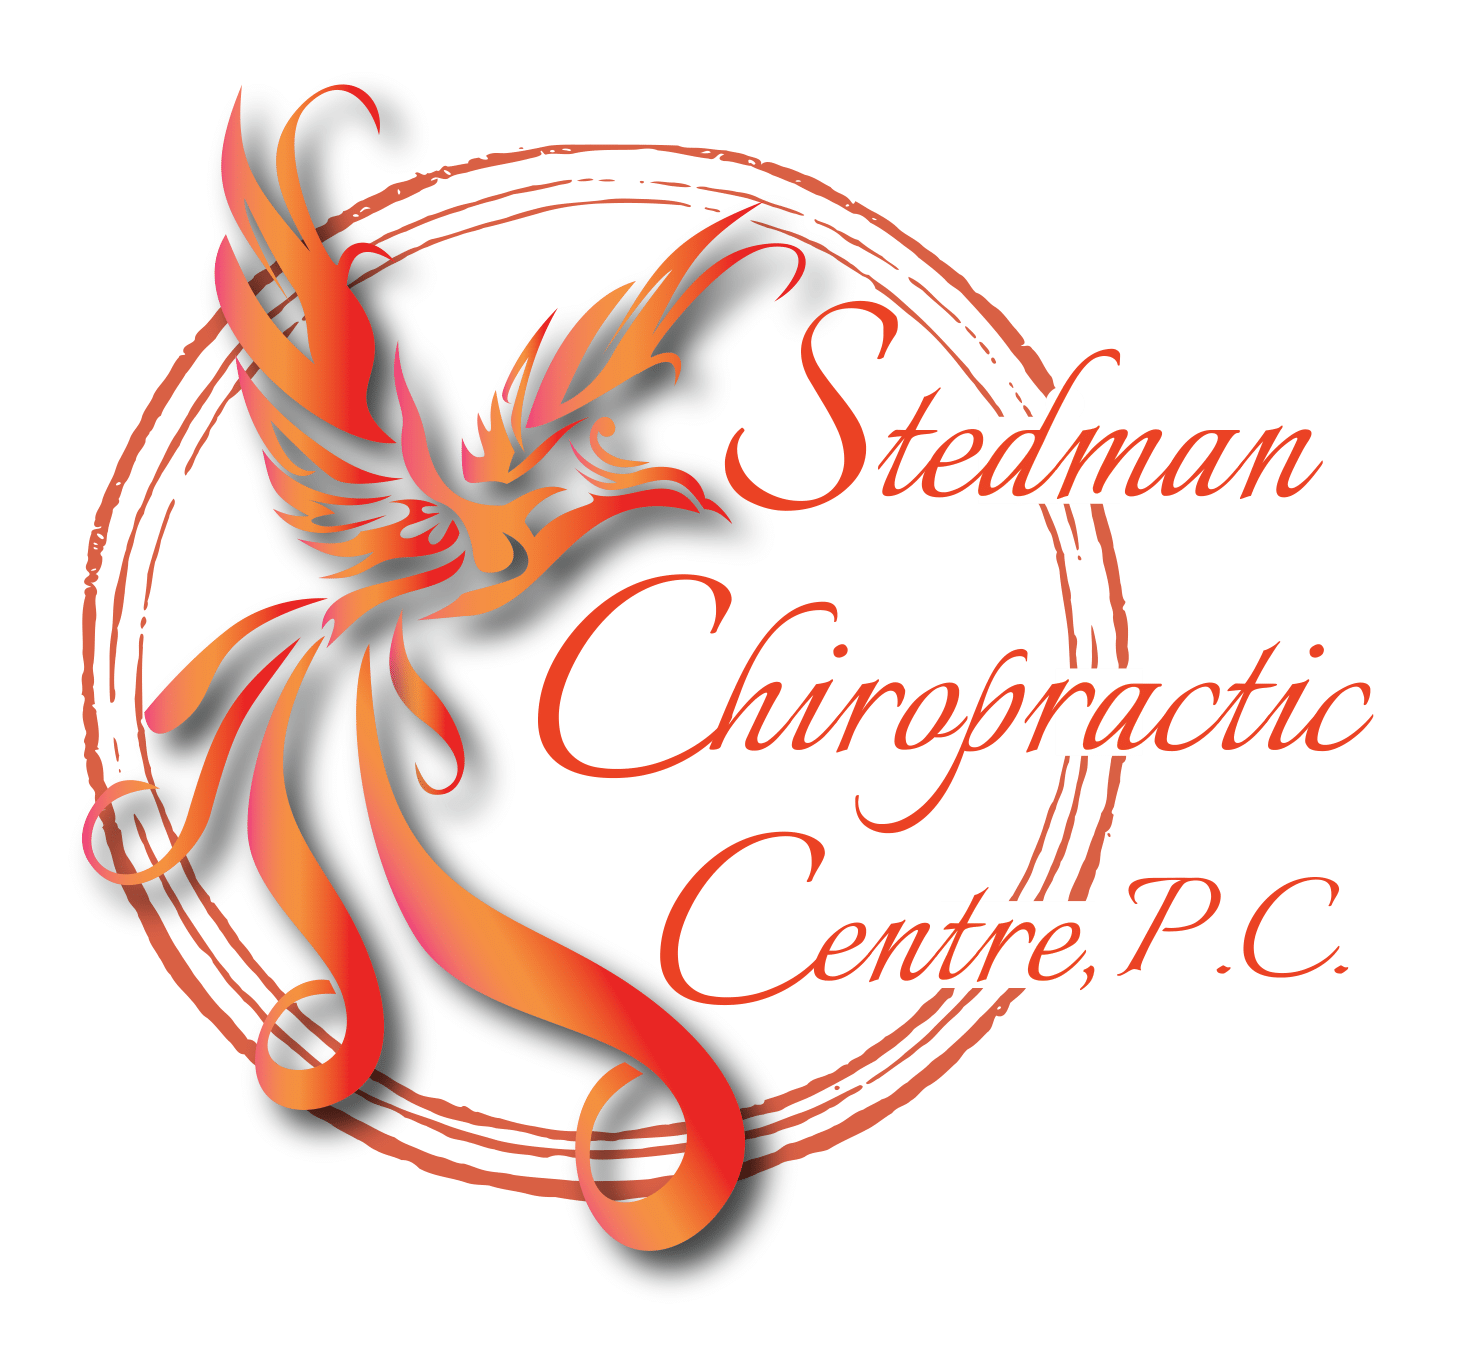 Stedman Chiropractic Centre